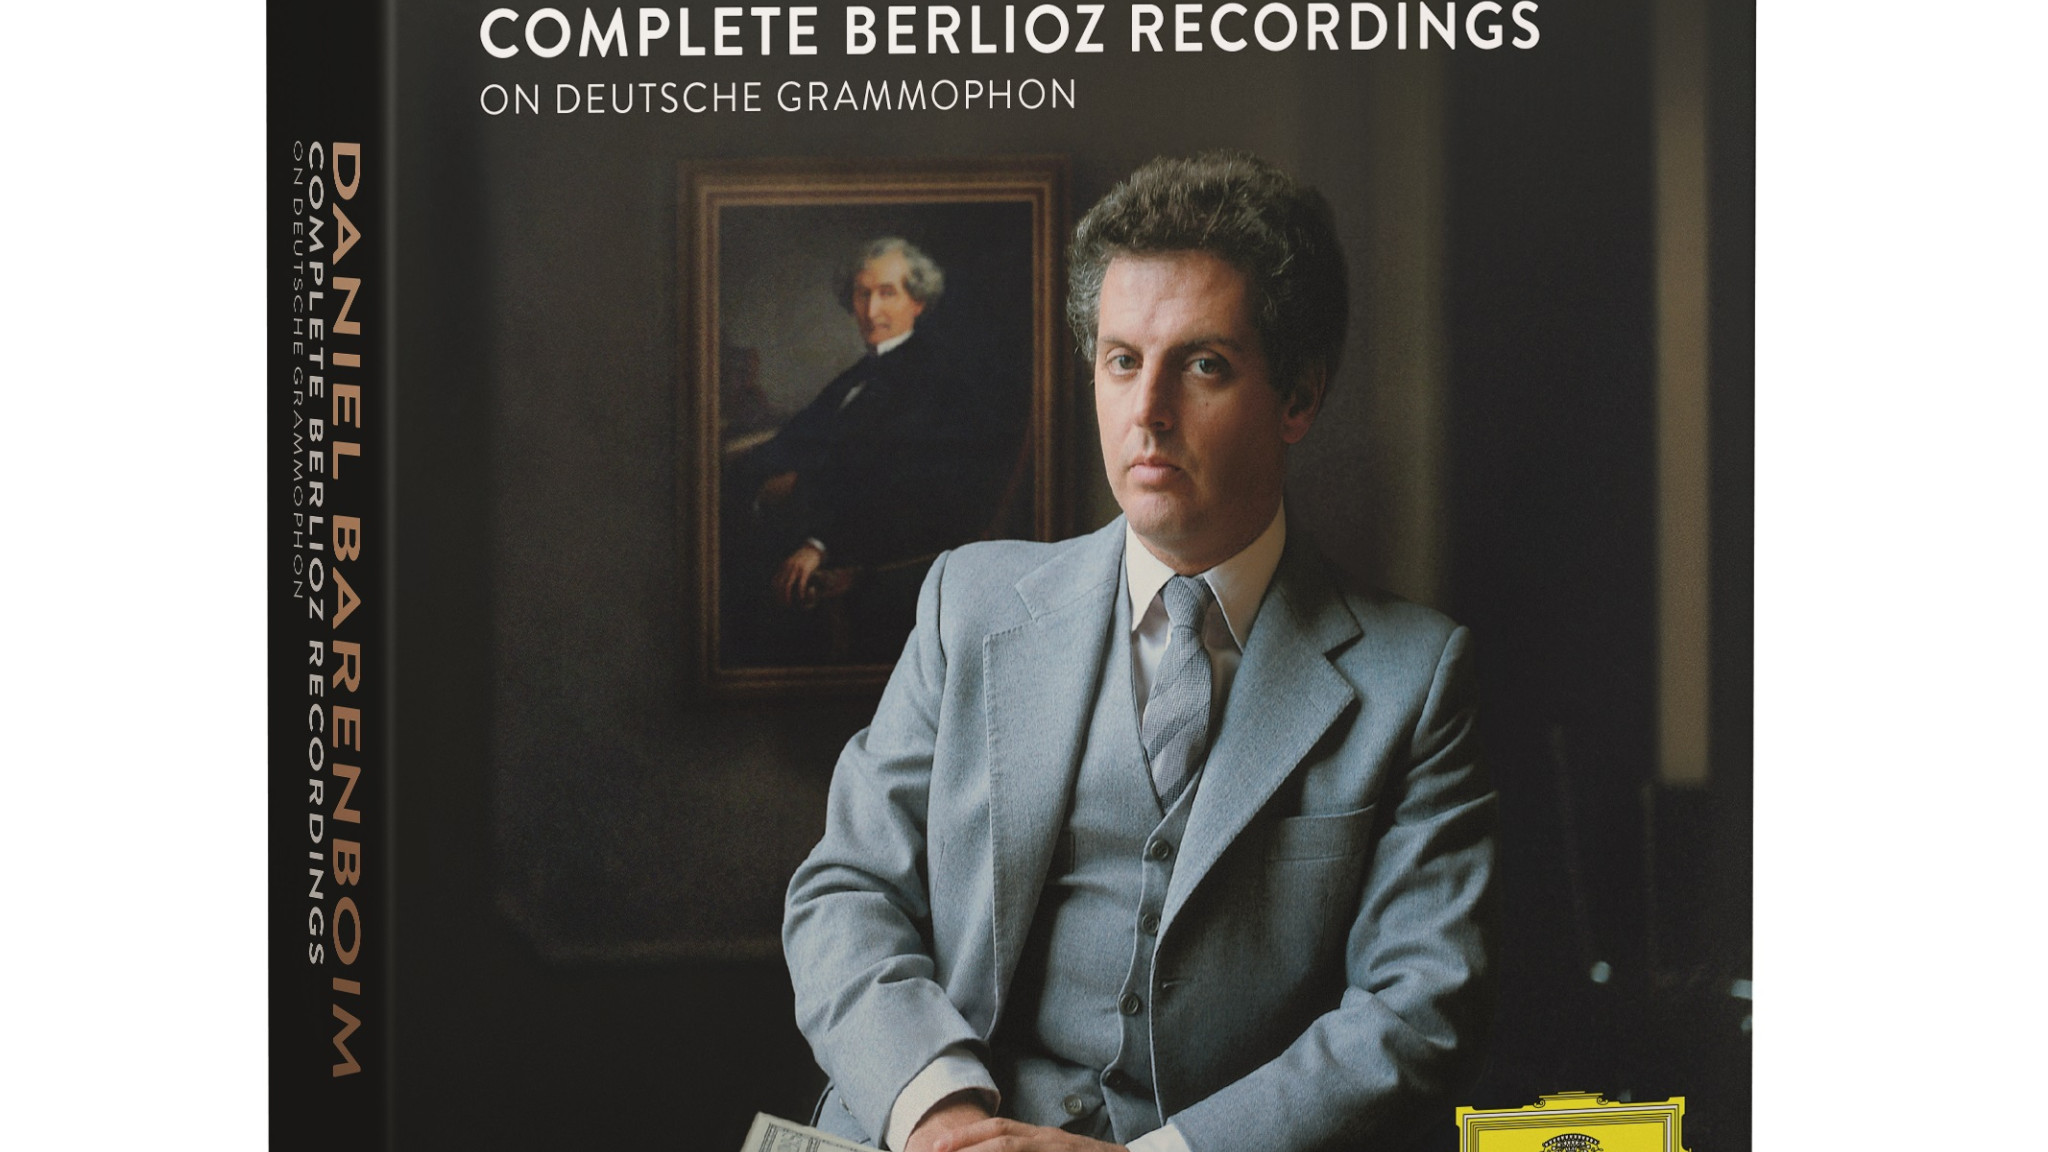 DG presents: Daniel Barenboim – Complete Berlioz Recordings